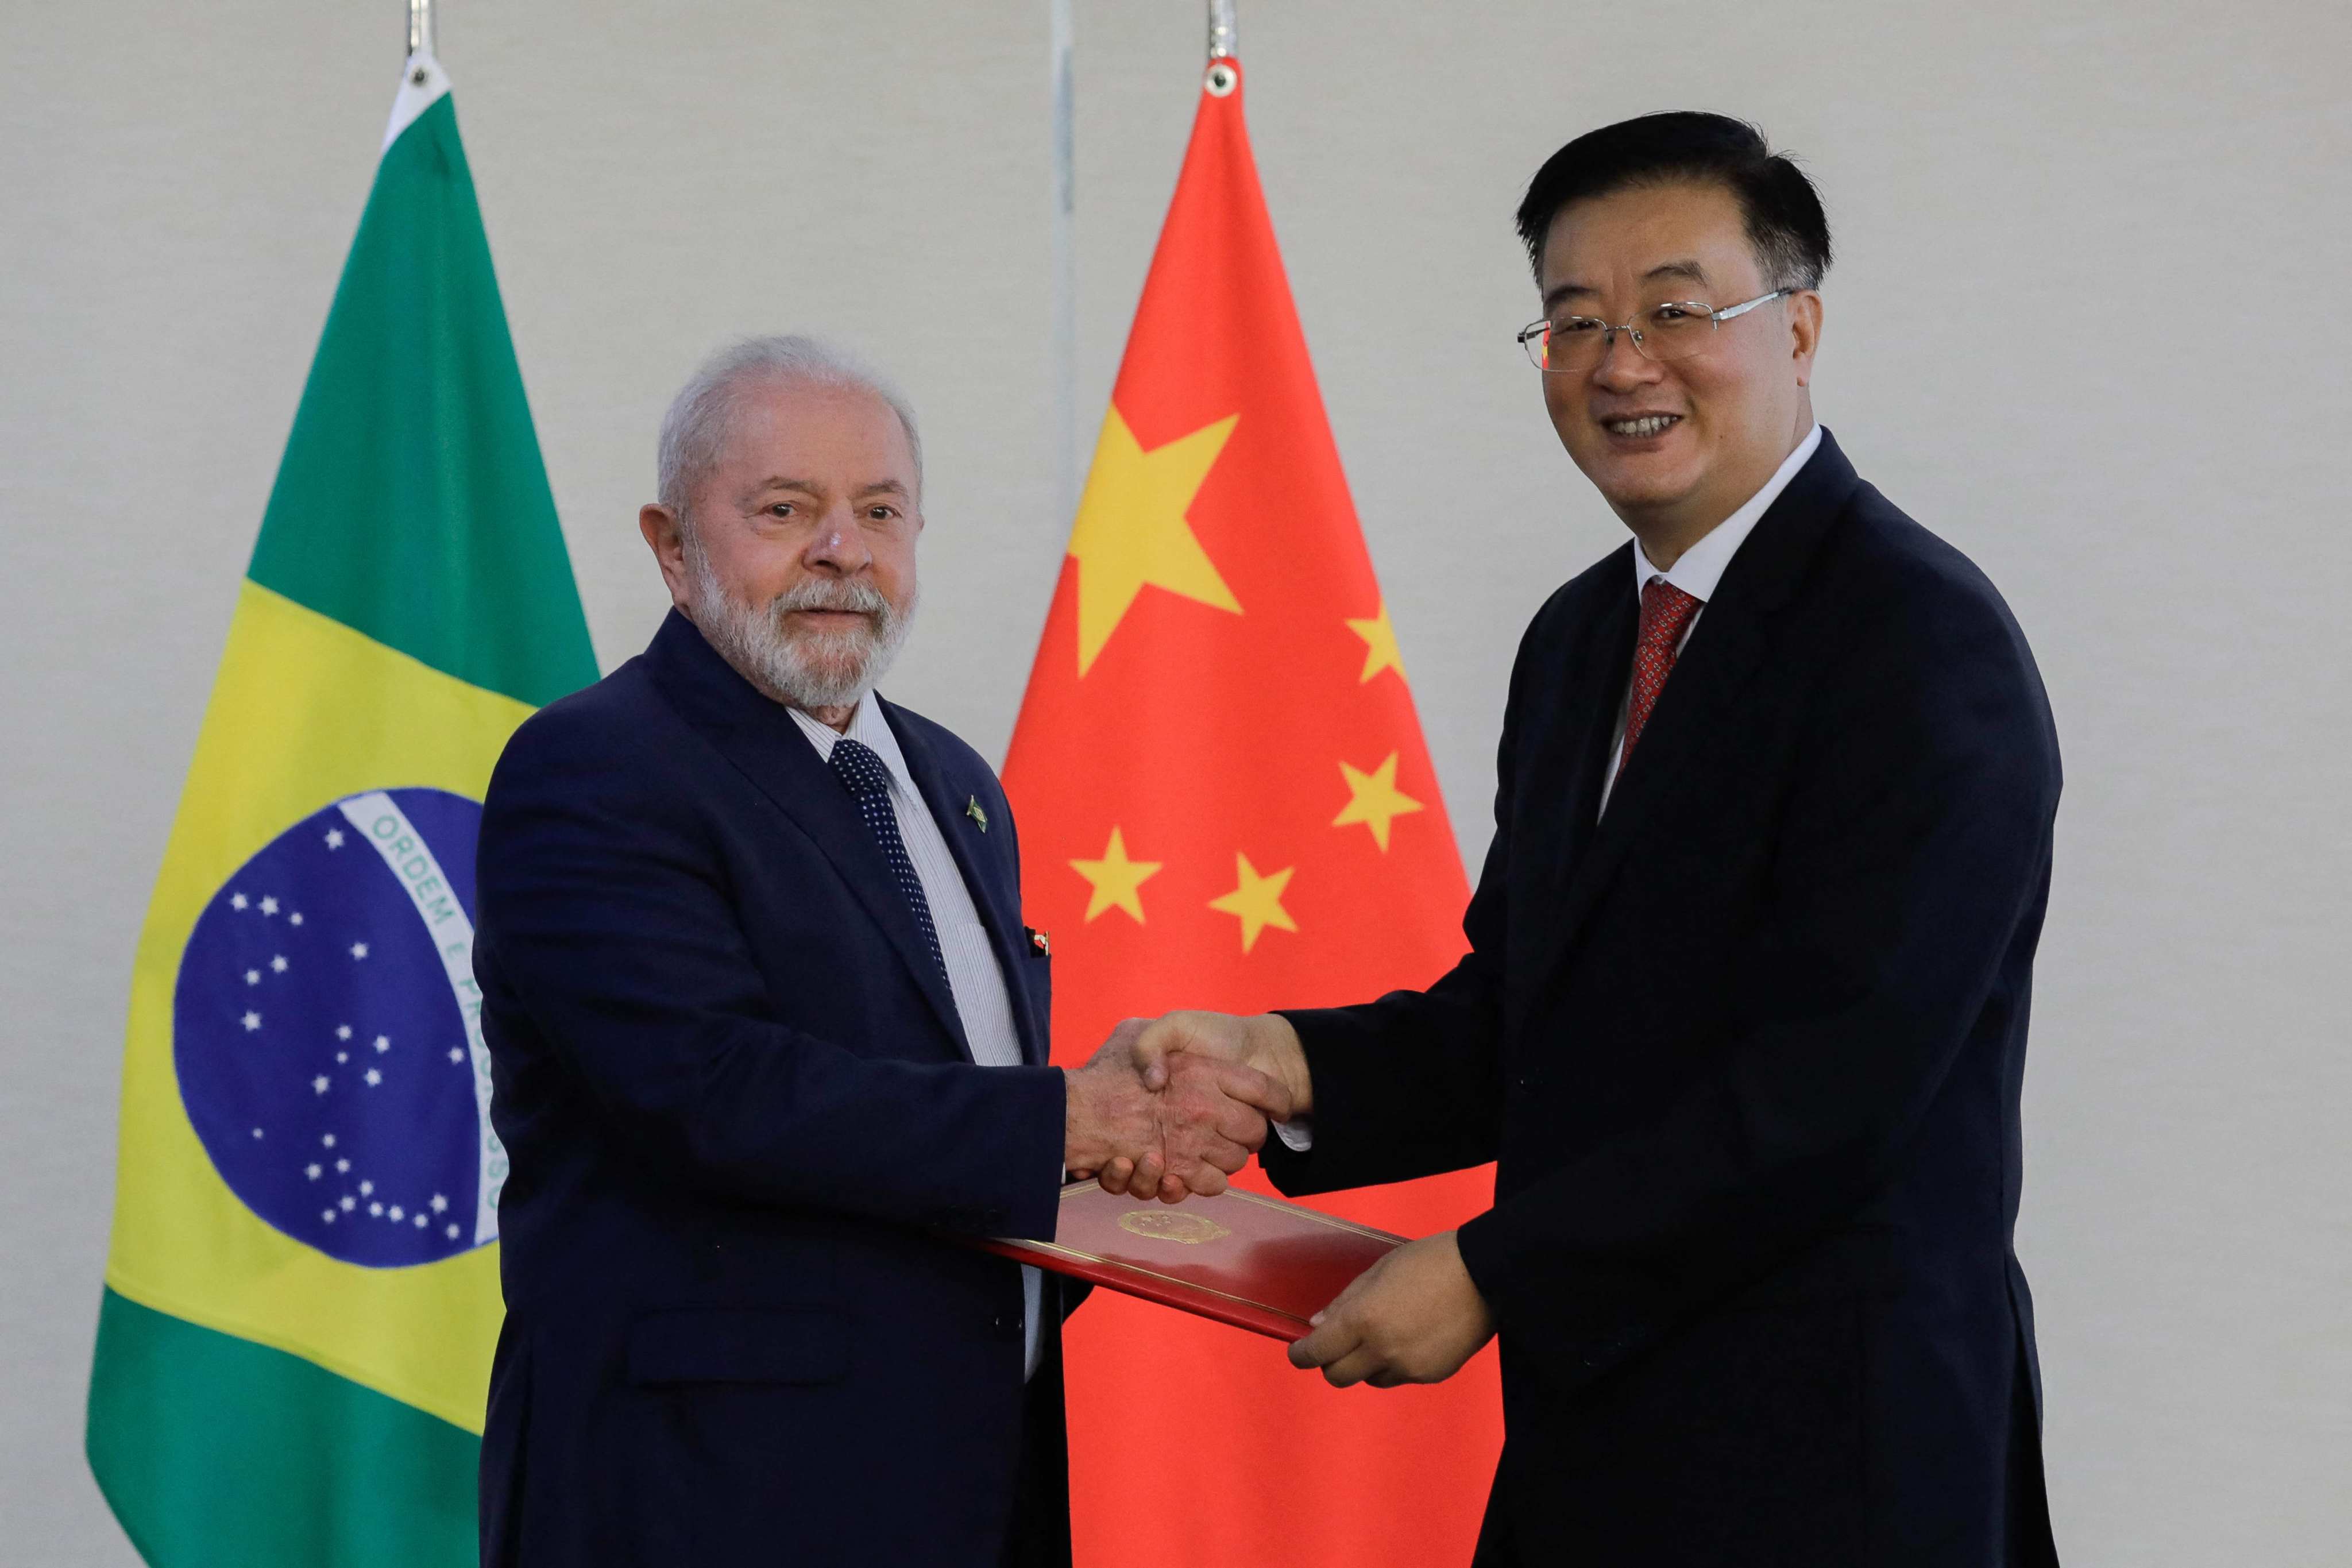 Brazilian President Luiz Inacio Lula da Silva is presented with the credentials of Zhu Qingqiao, China’s ambassador, in Brasilia in February. Photo: AFP